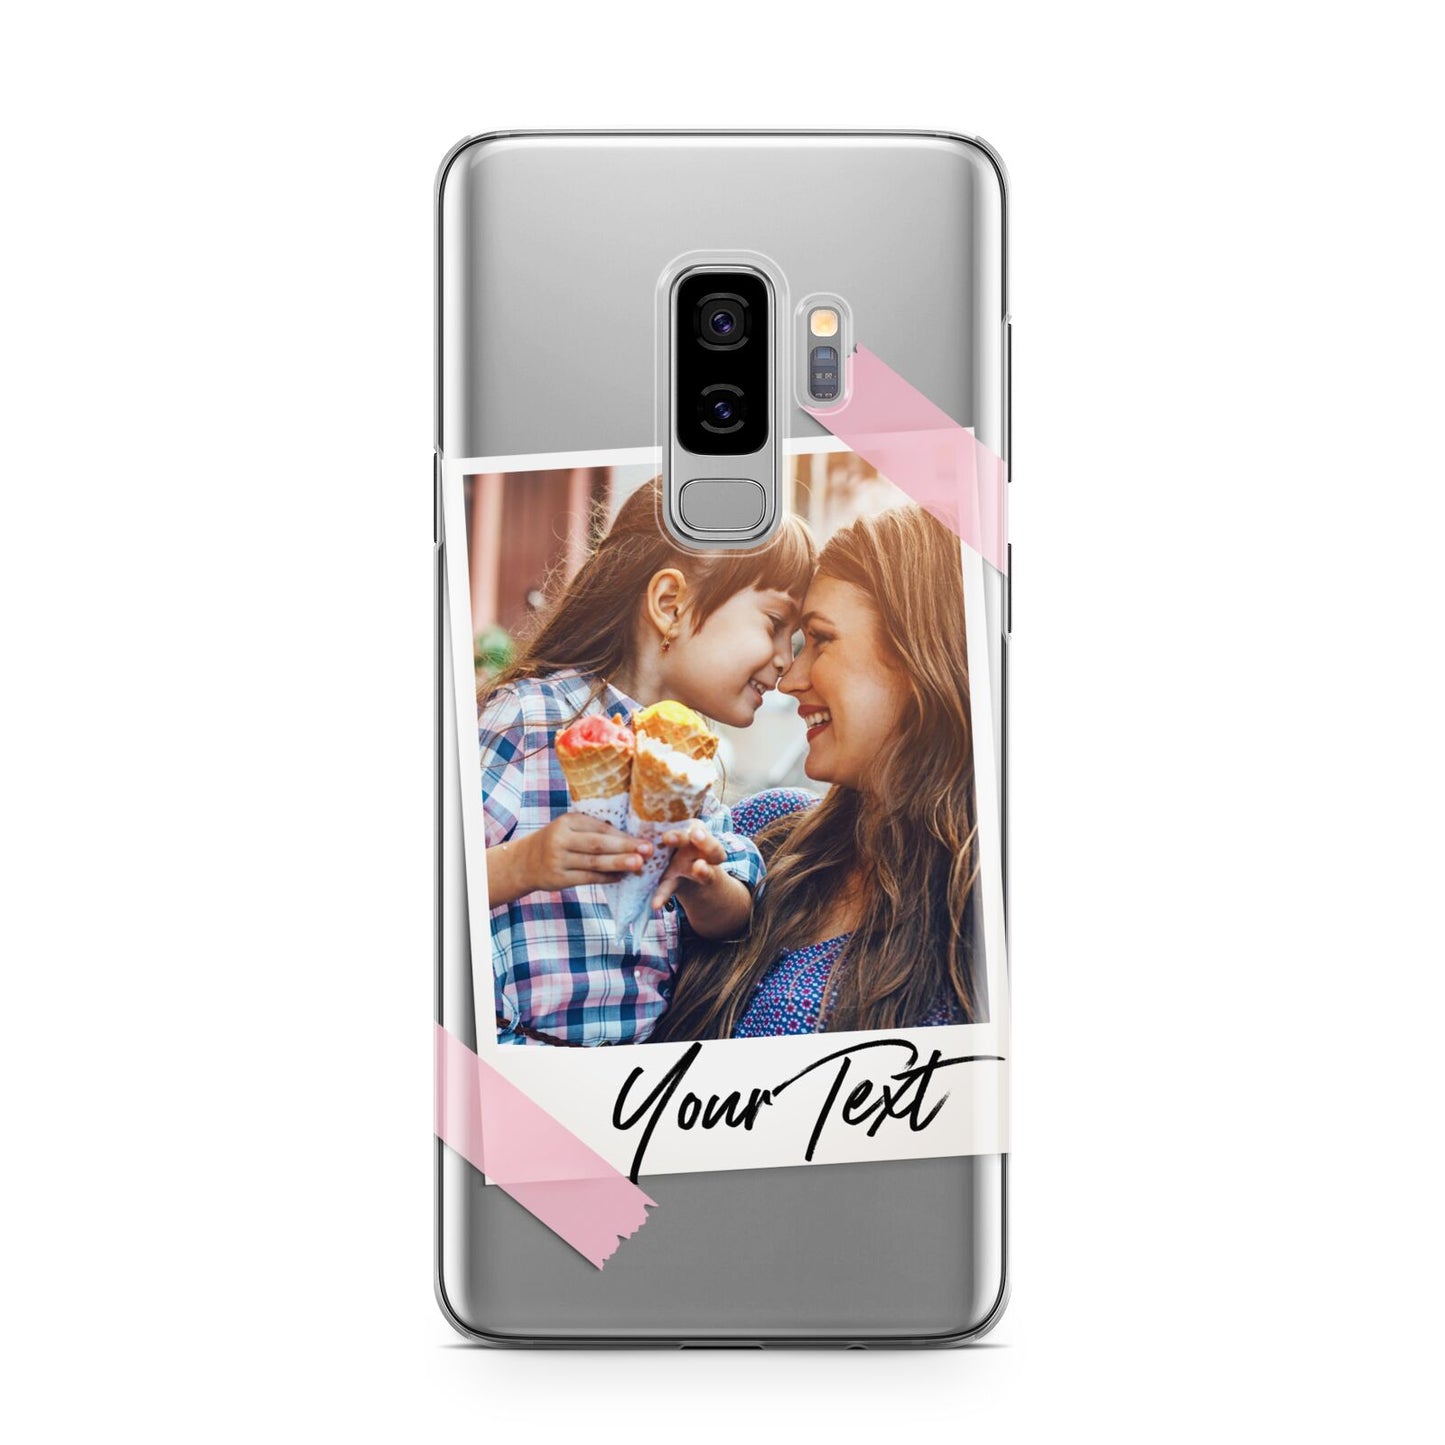 Photo Frame Samsung Galaxy S9 Plus Case on Silver phone